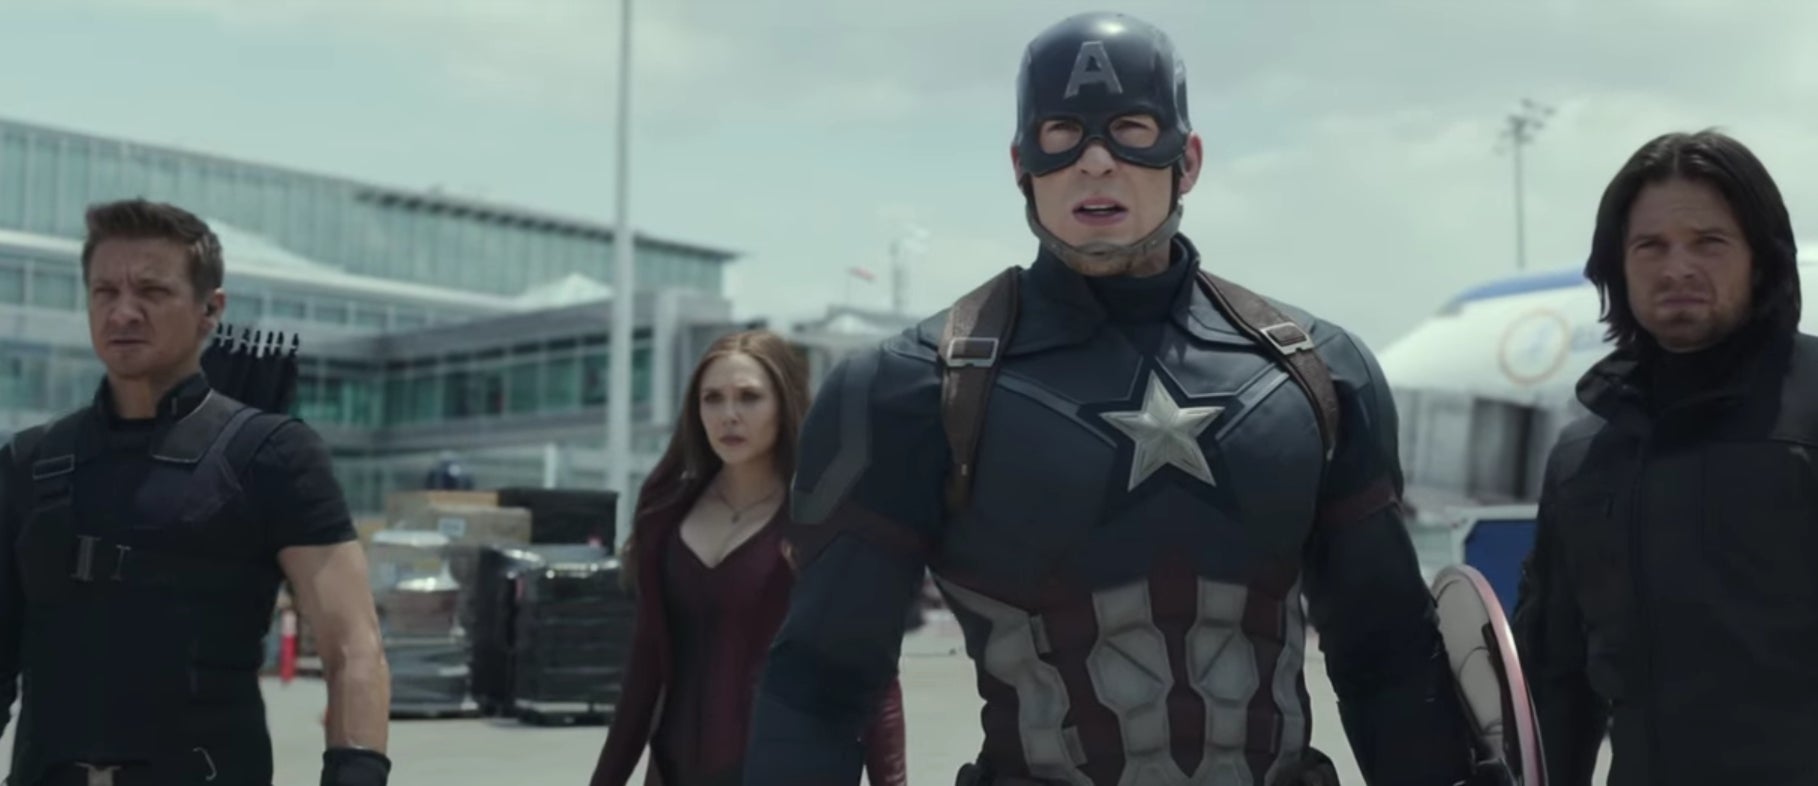 Captain America: Civil War download the new version for windows